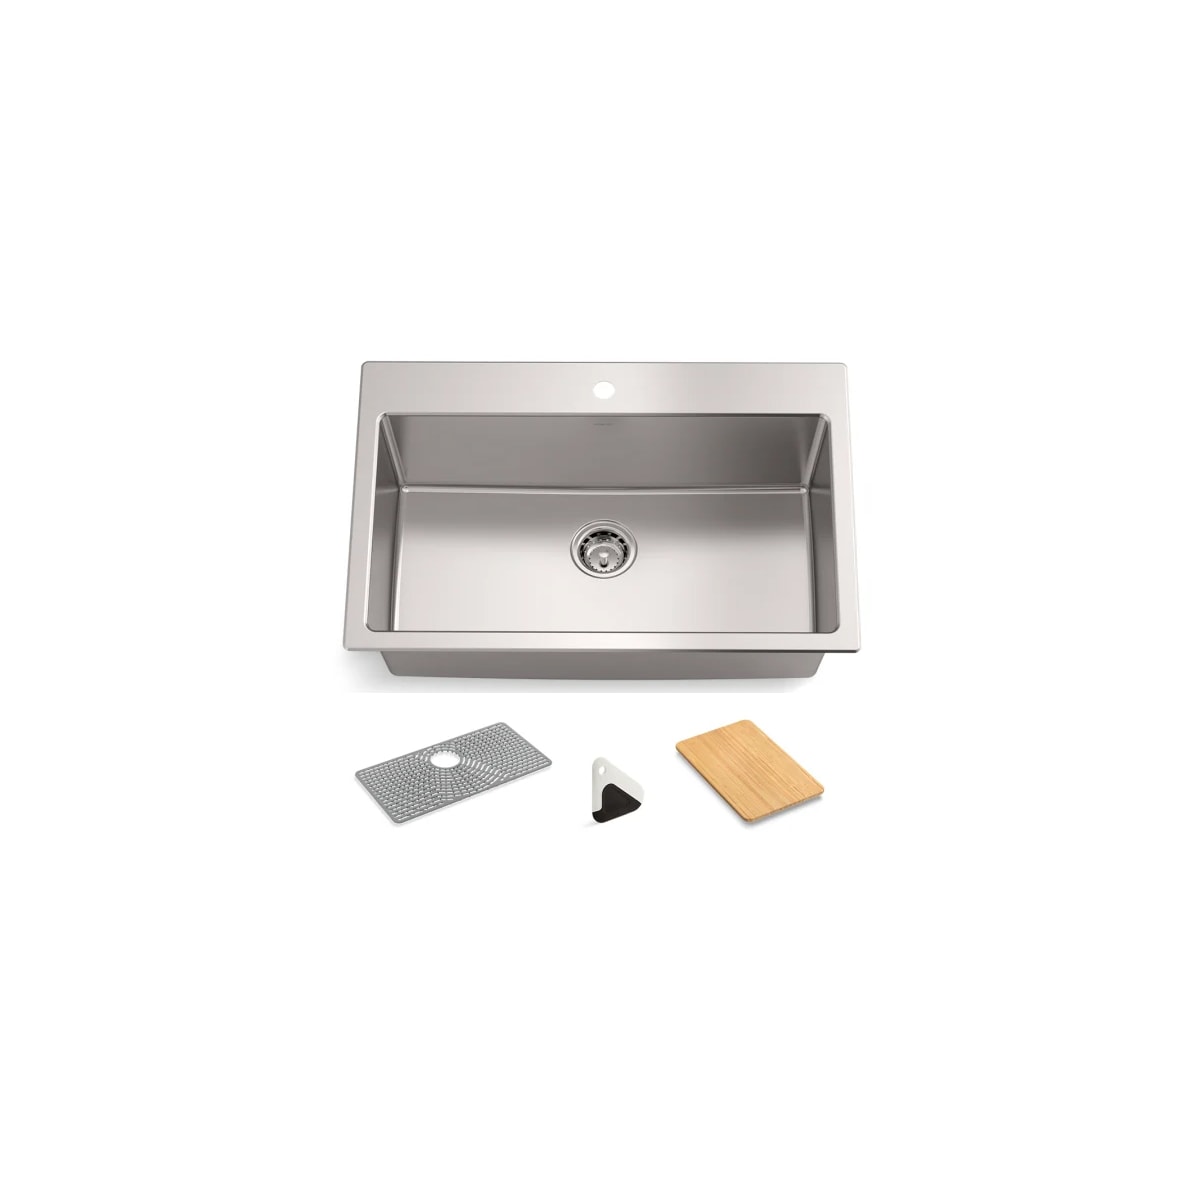 KOHLER Verse Stainless Steel Sink Rack in the Sink Grids & Mats